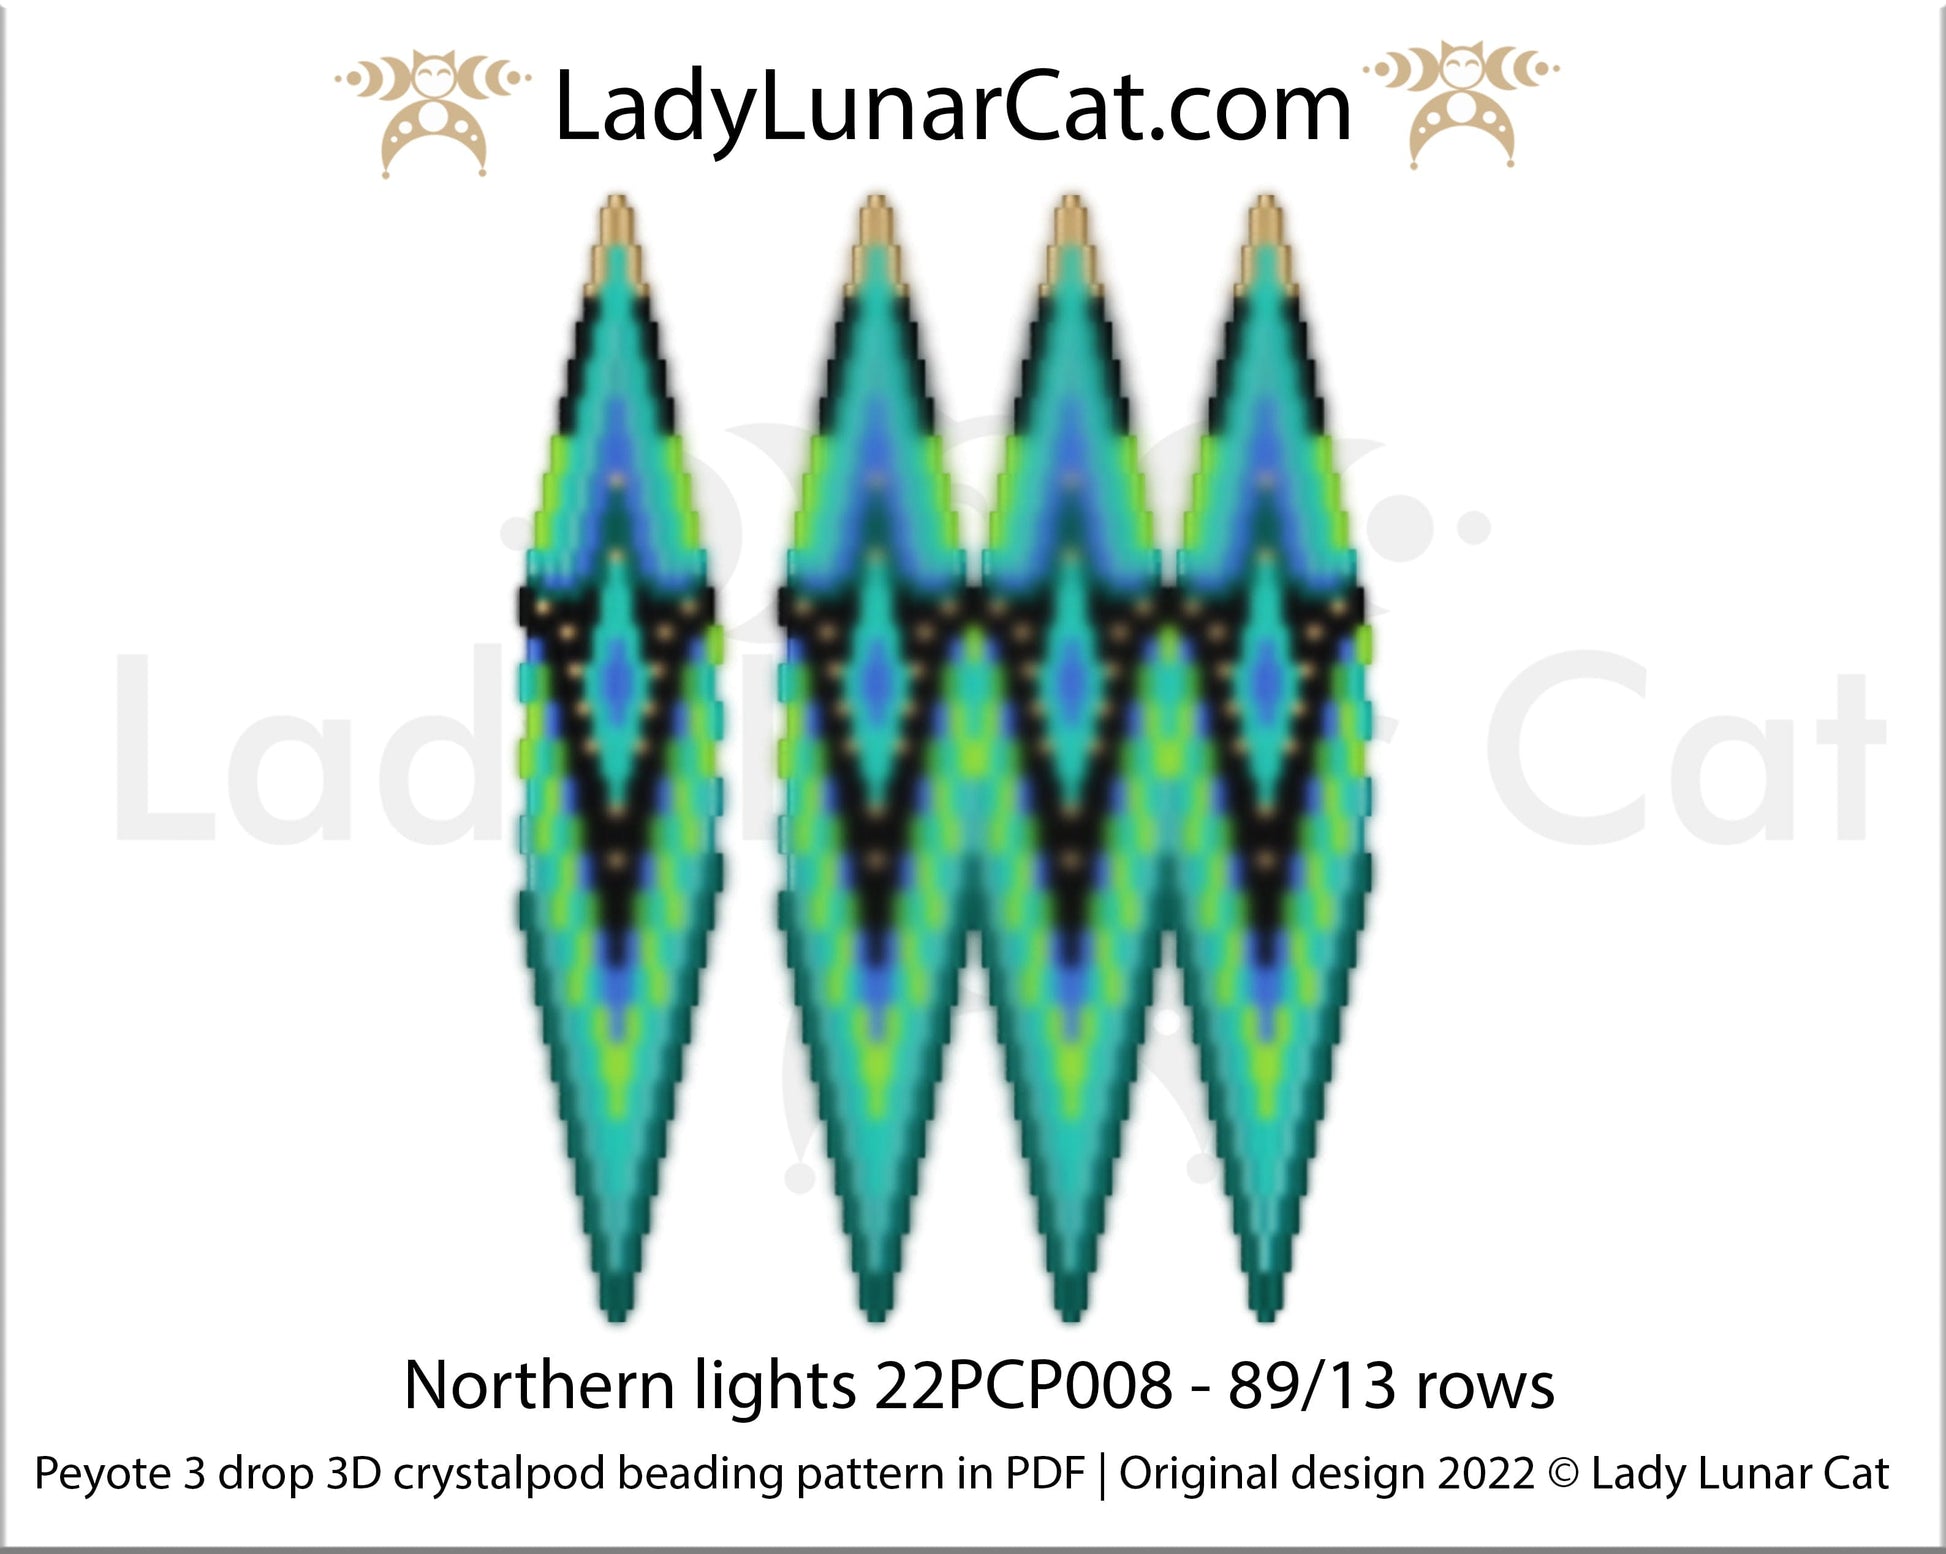 Peyote 3drop pod pattern or crystalpod pattern for beading  Northern lights 22PCP008 LadyLunarCat